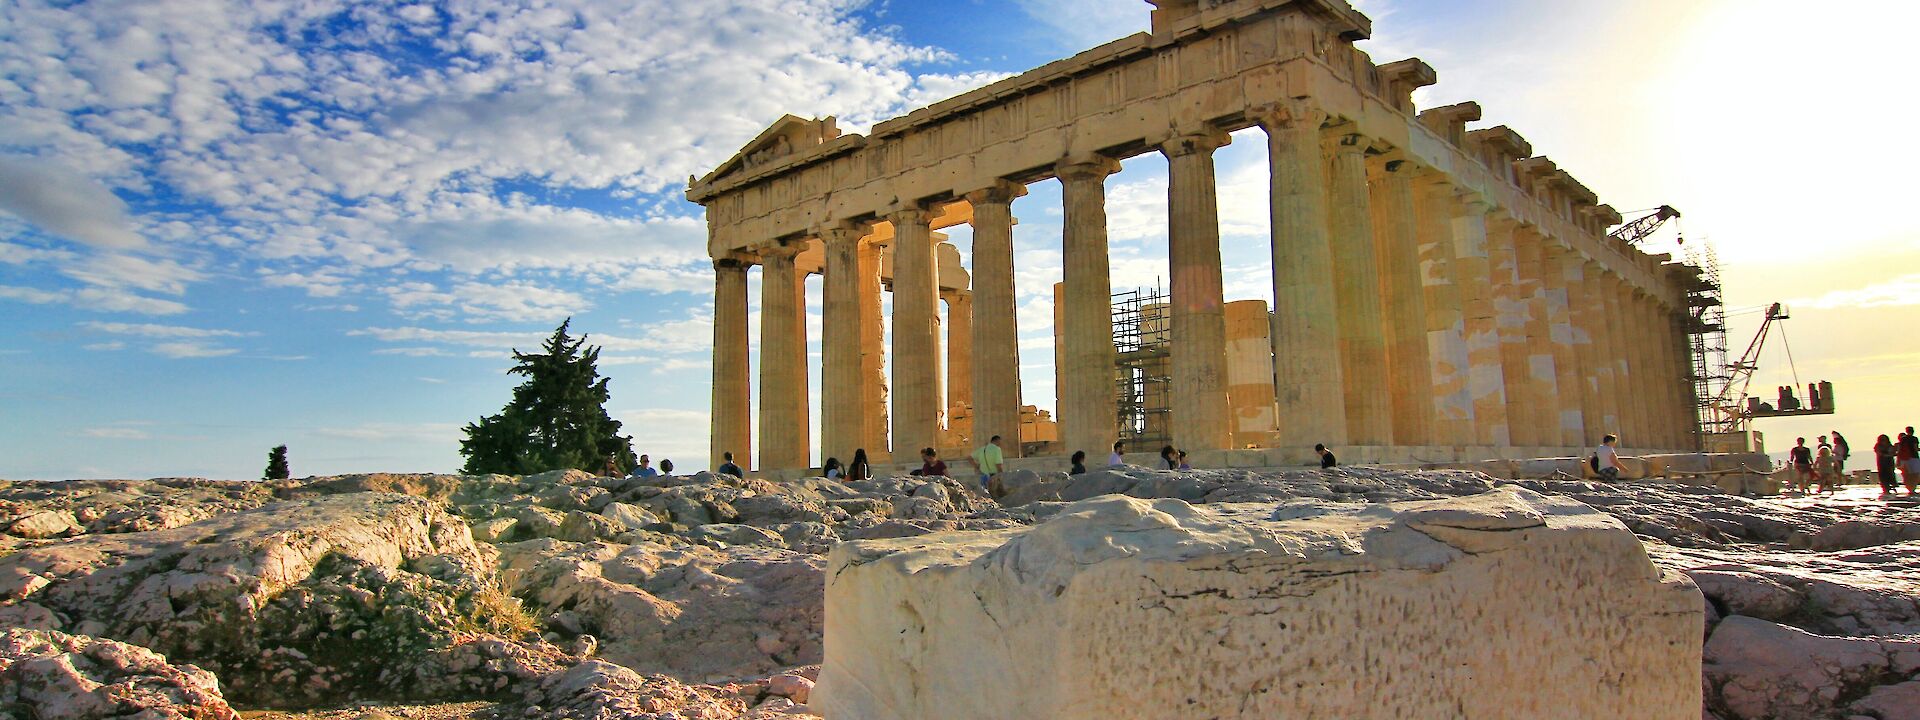 Acropolis, Athens, Greece. Patrick@Unsplash